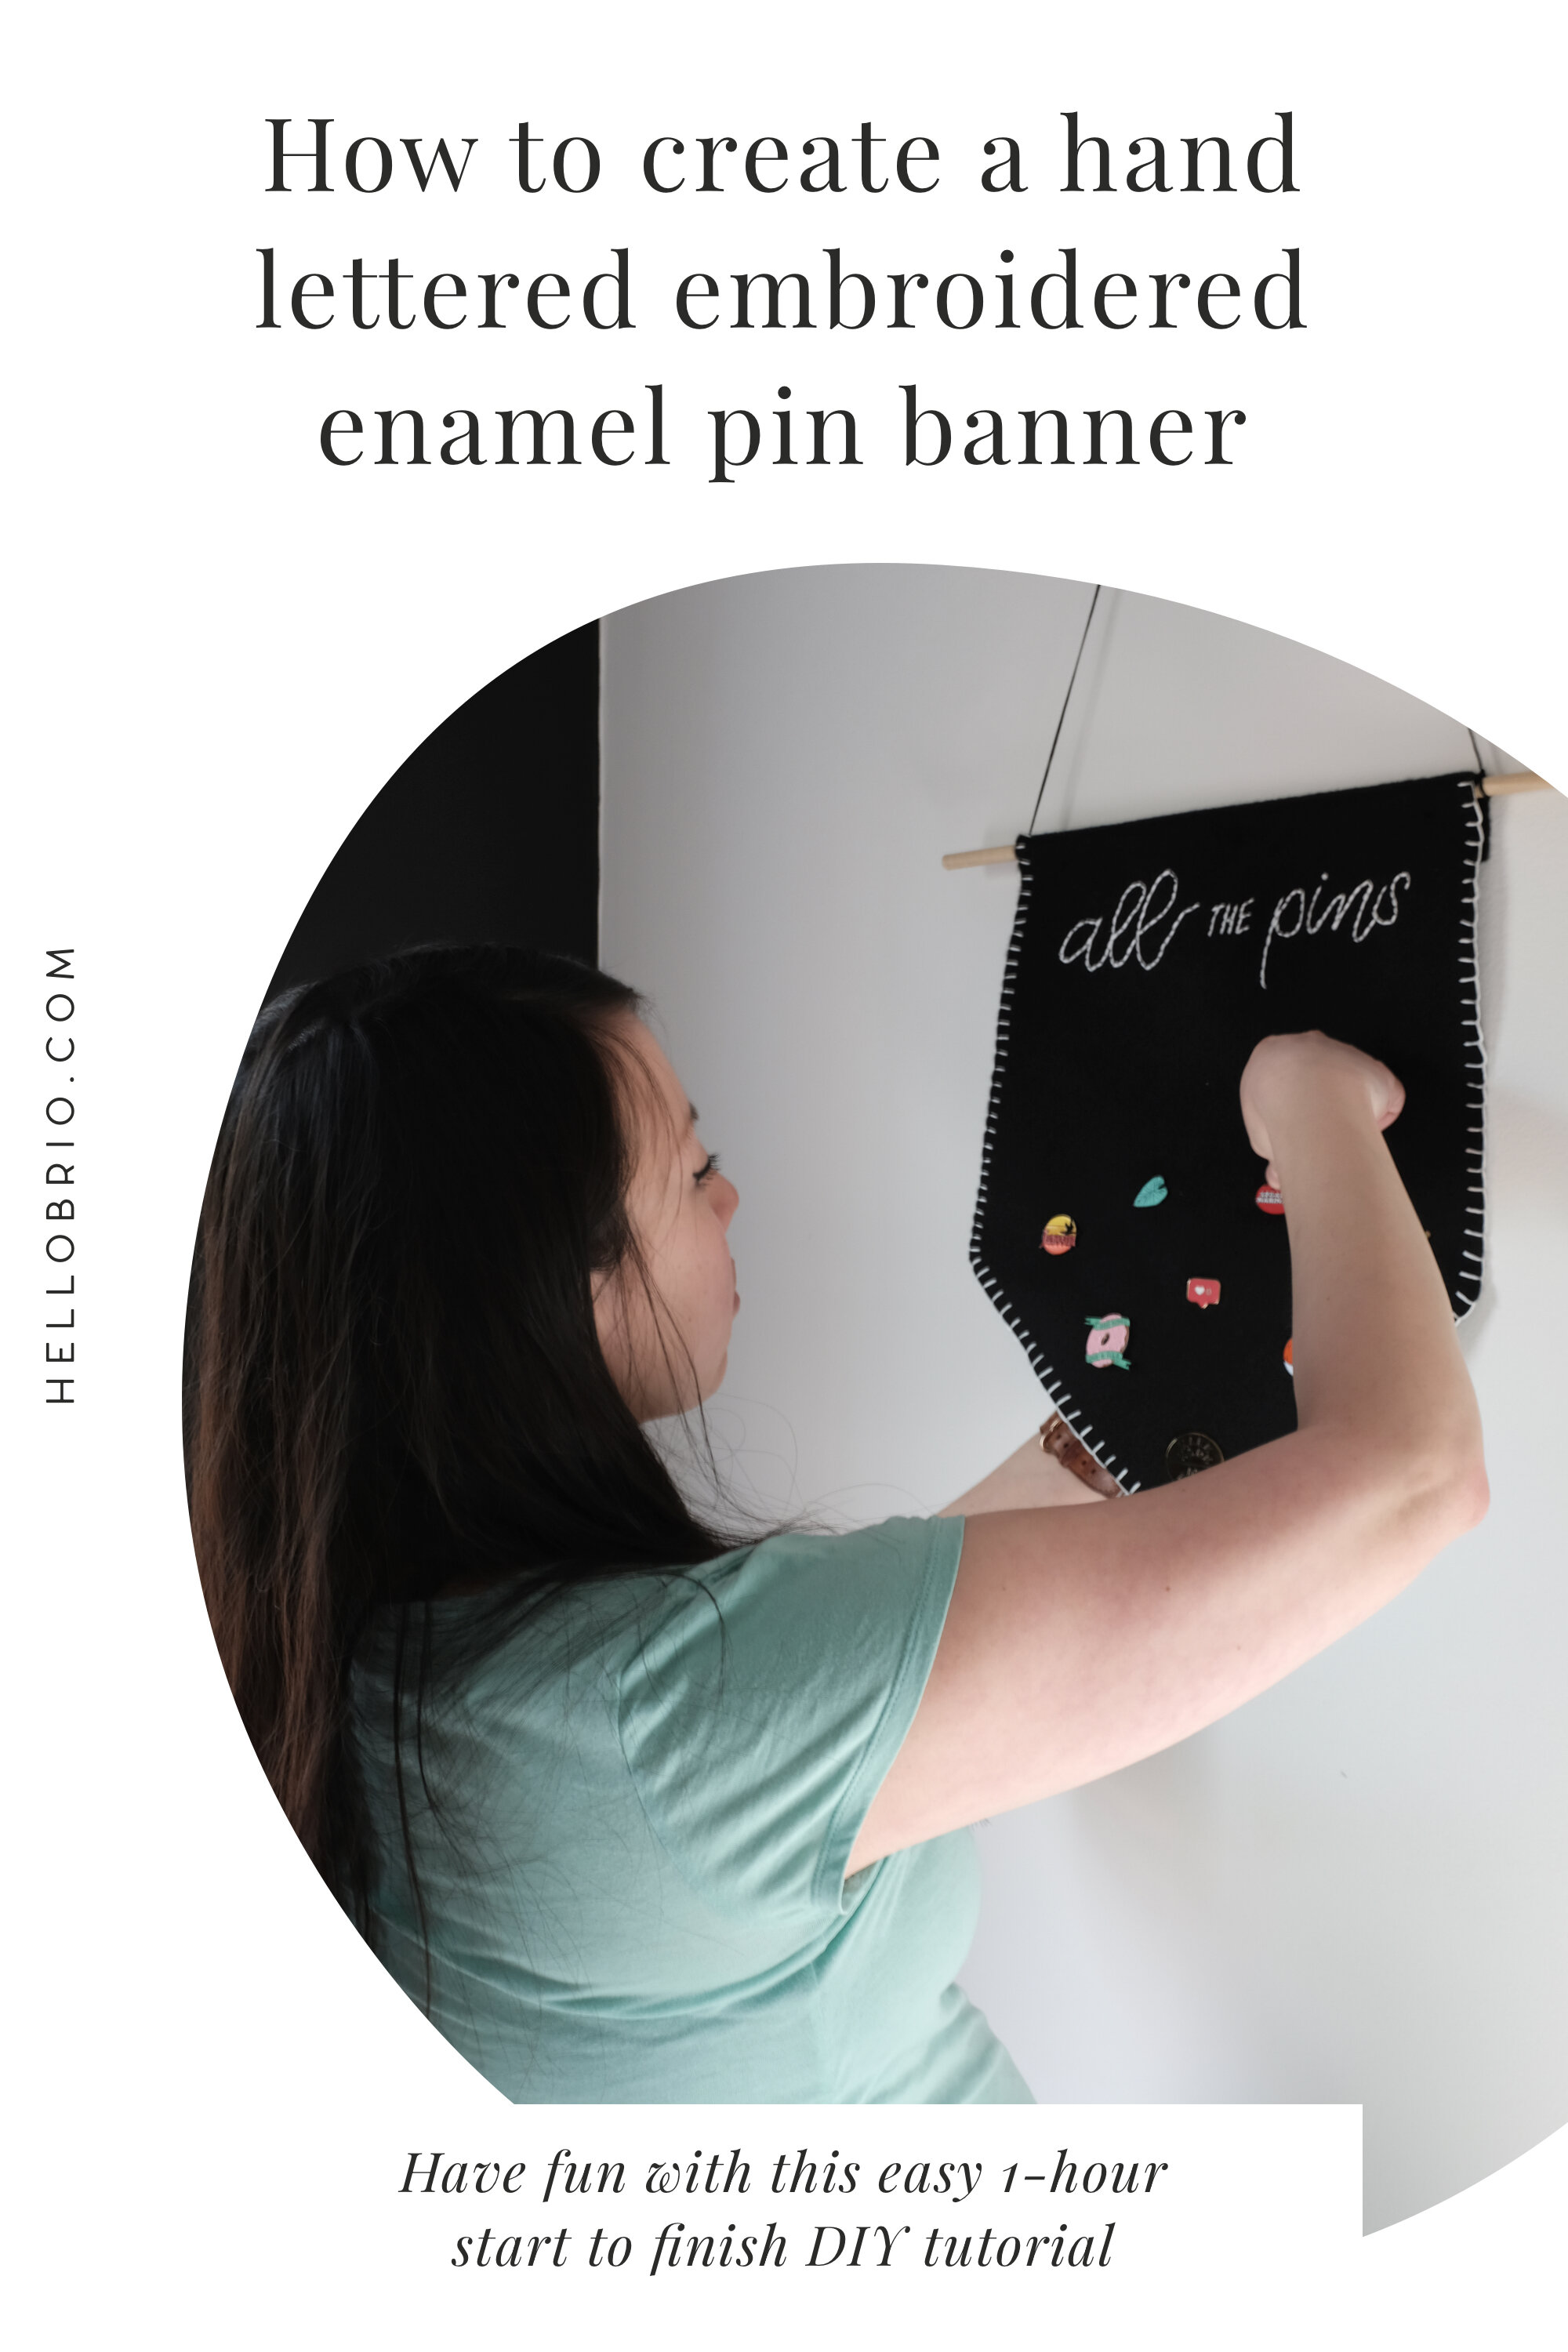 Blank Canvas Banners - PinBanner